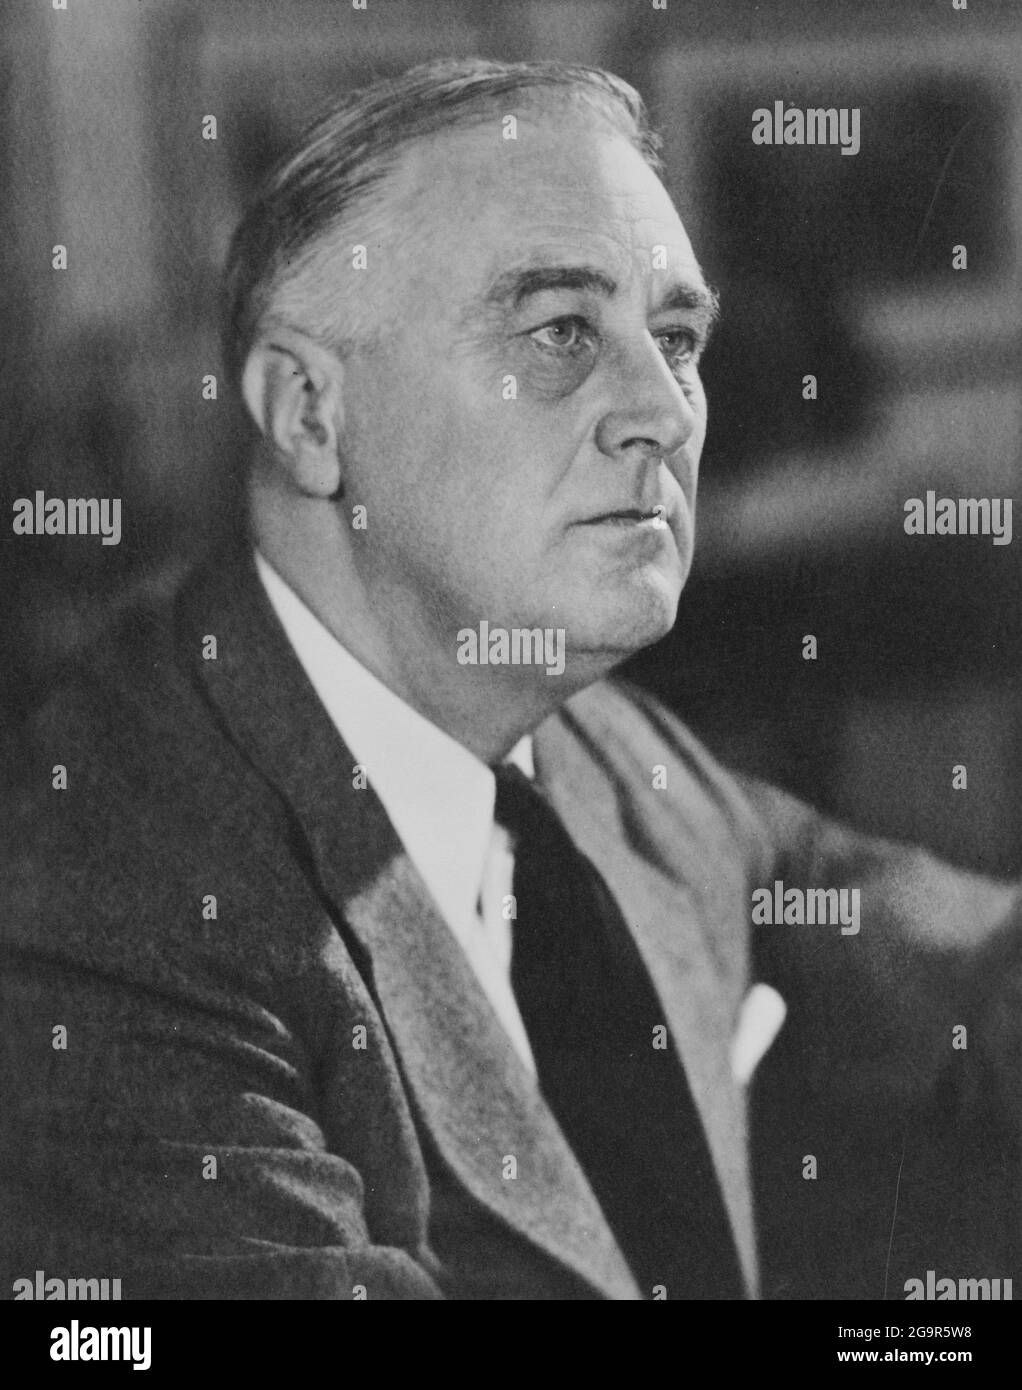 WASHINGTON DC, USA - um 1941 - Porträt des Krieges US-Präsident Franklin D Roosevelt - Foto: Geopix Stockfoto